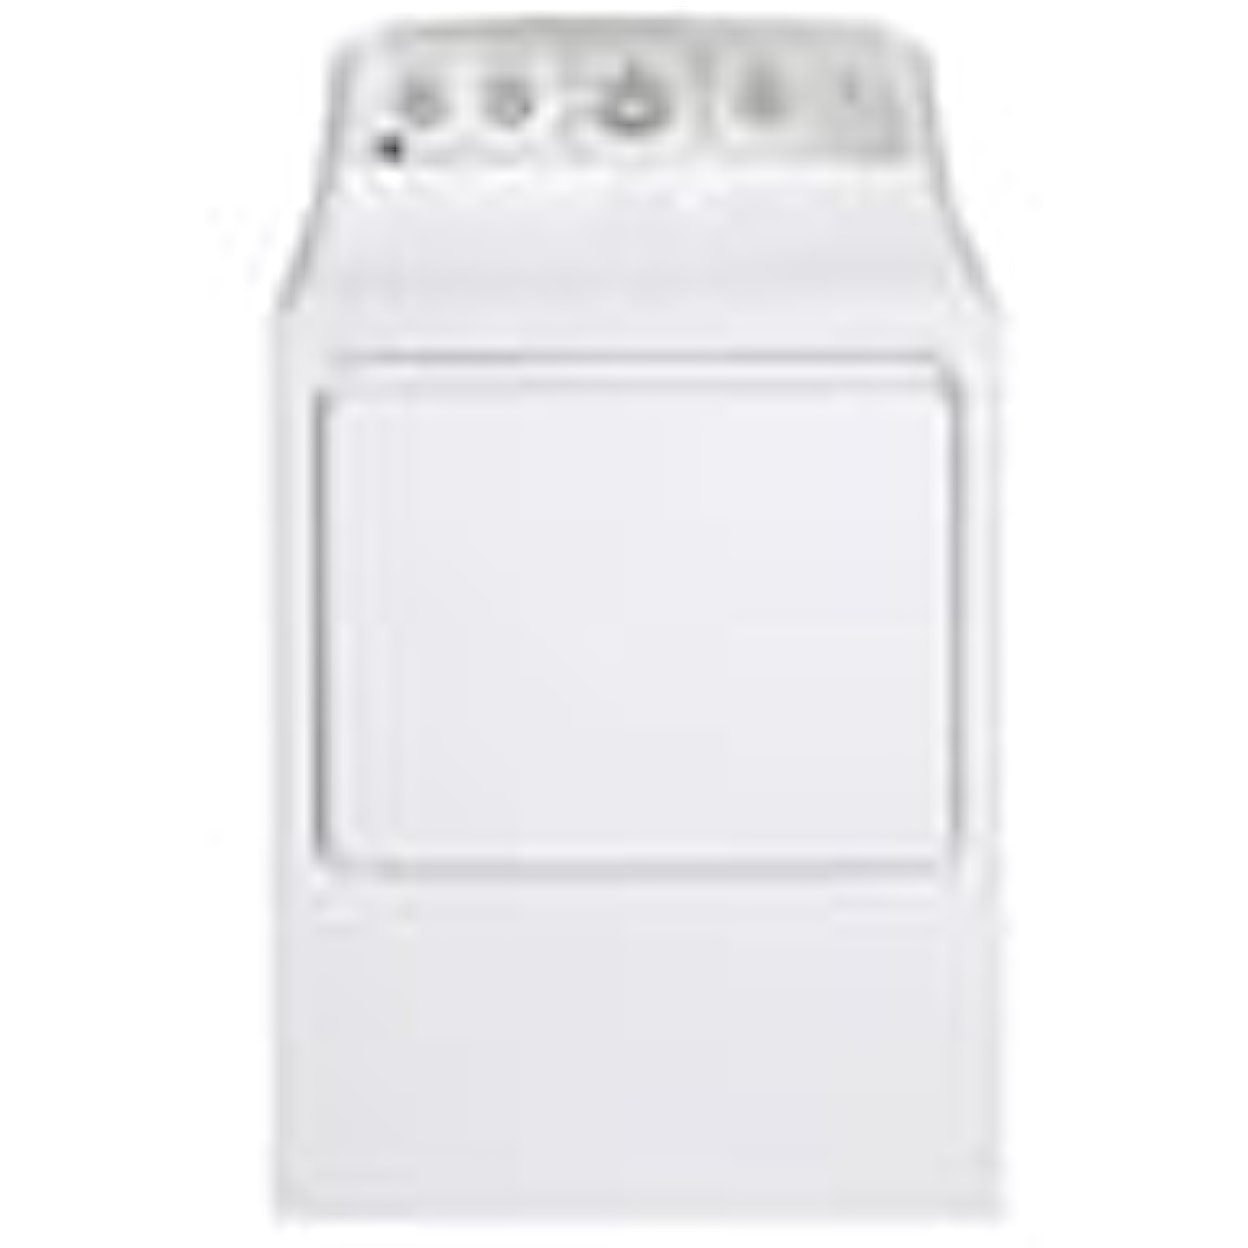 GE Appliances Dryers (Canada) Top Load Dryer